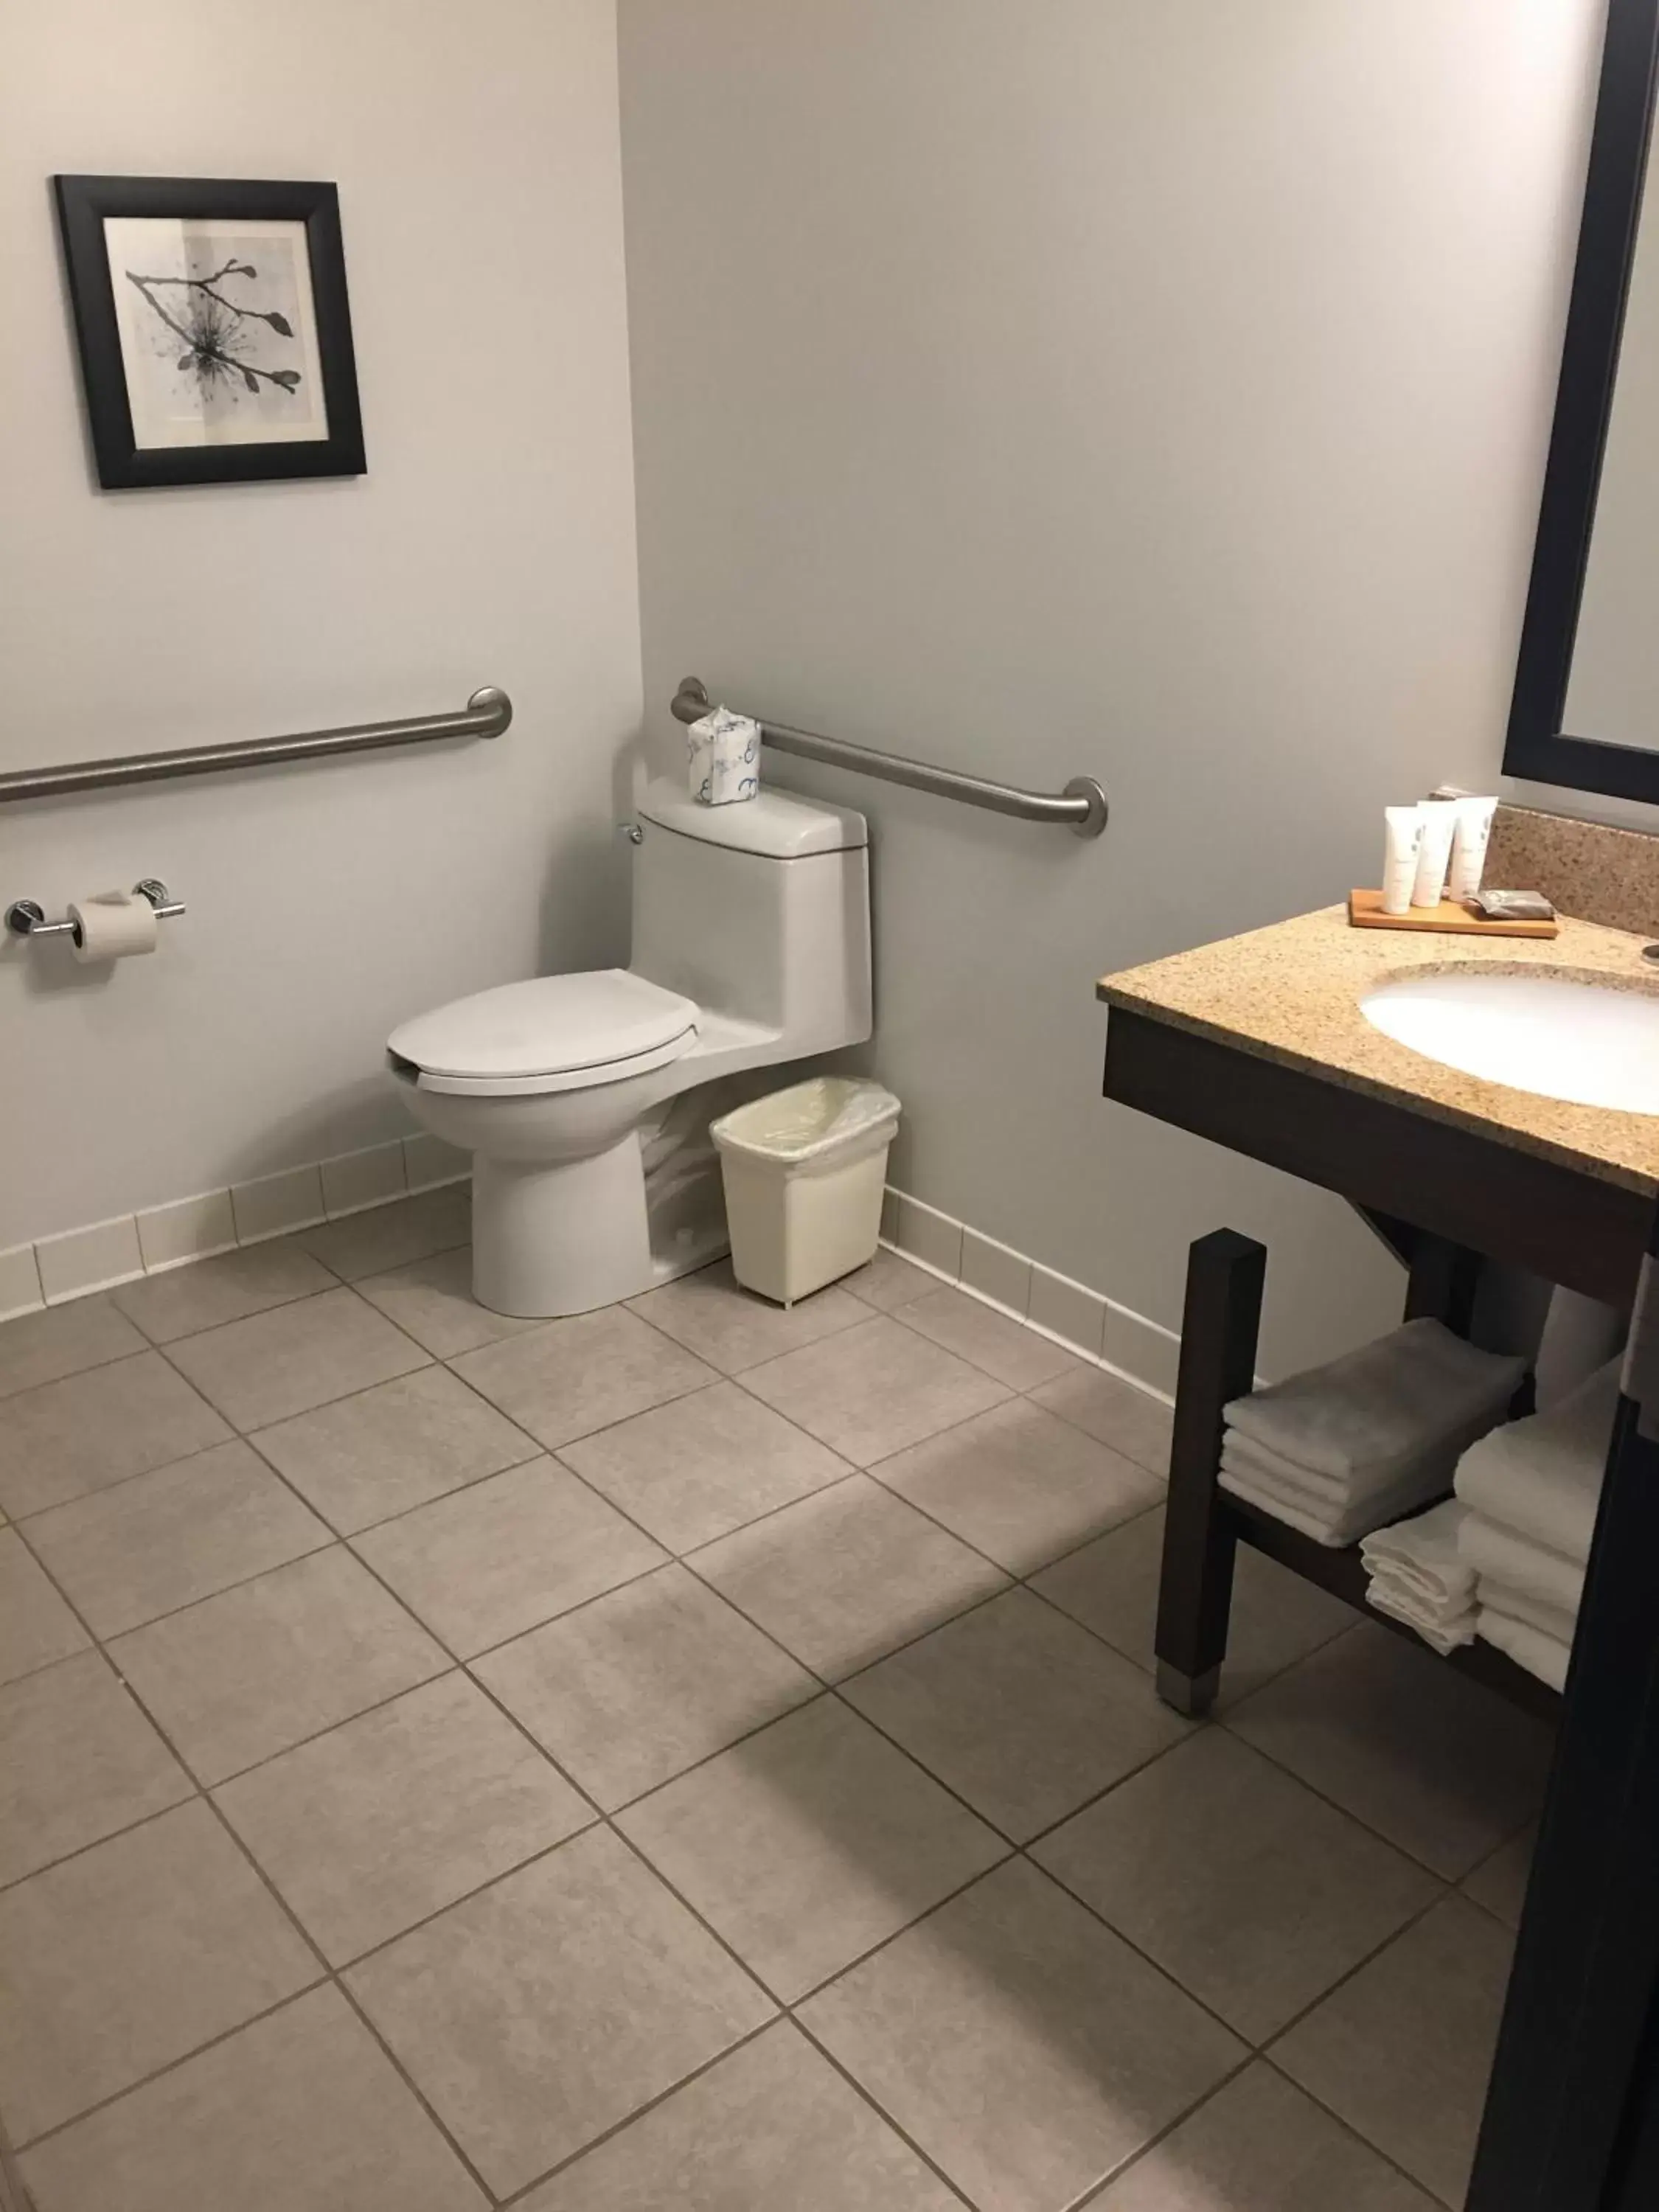 Bathroom in Country Inn & Suites by Radisson, Grand Rapids East, MI